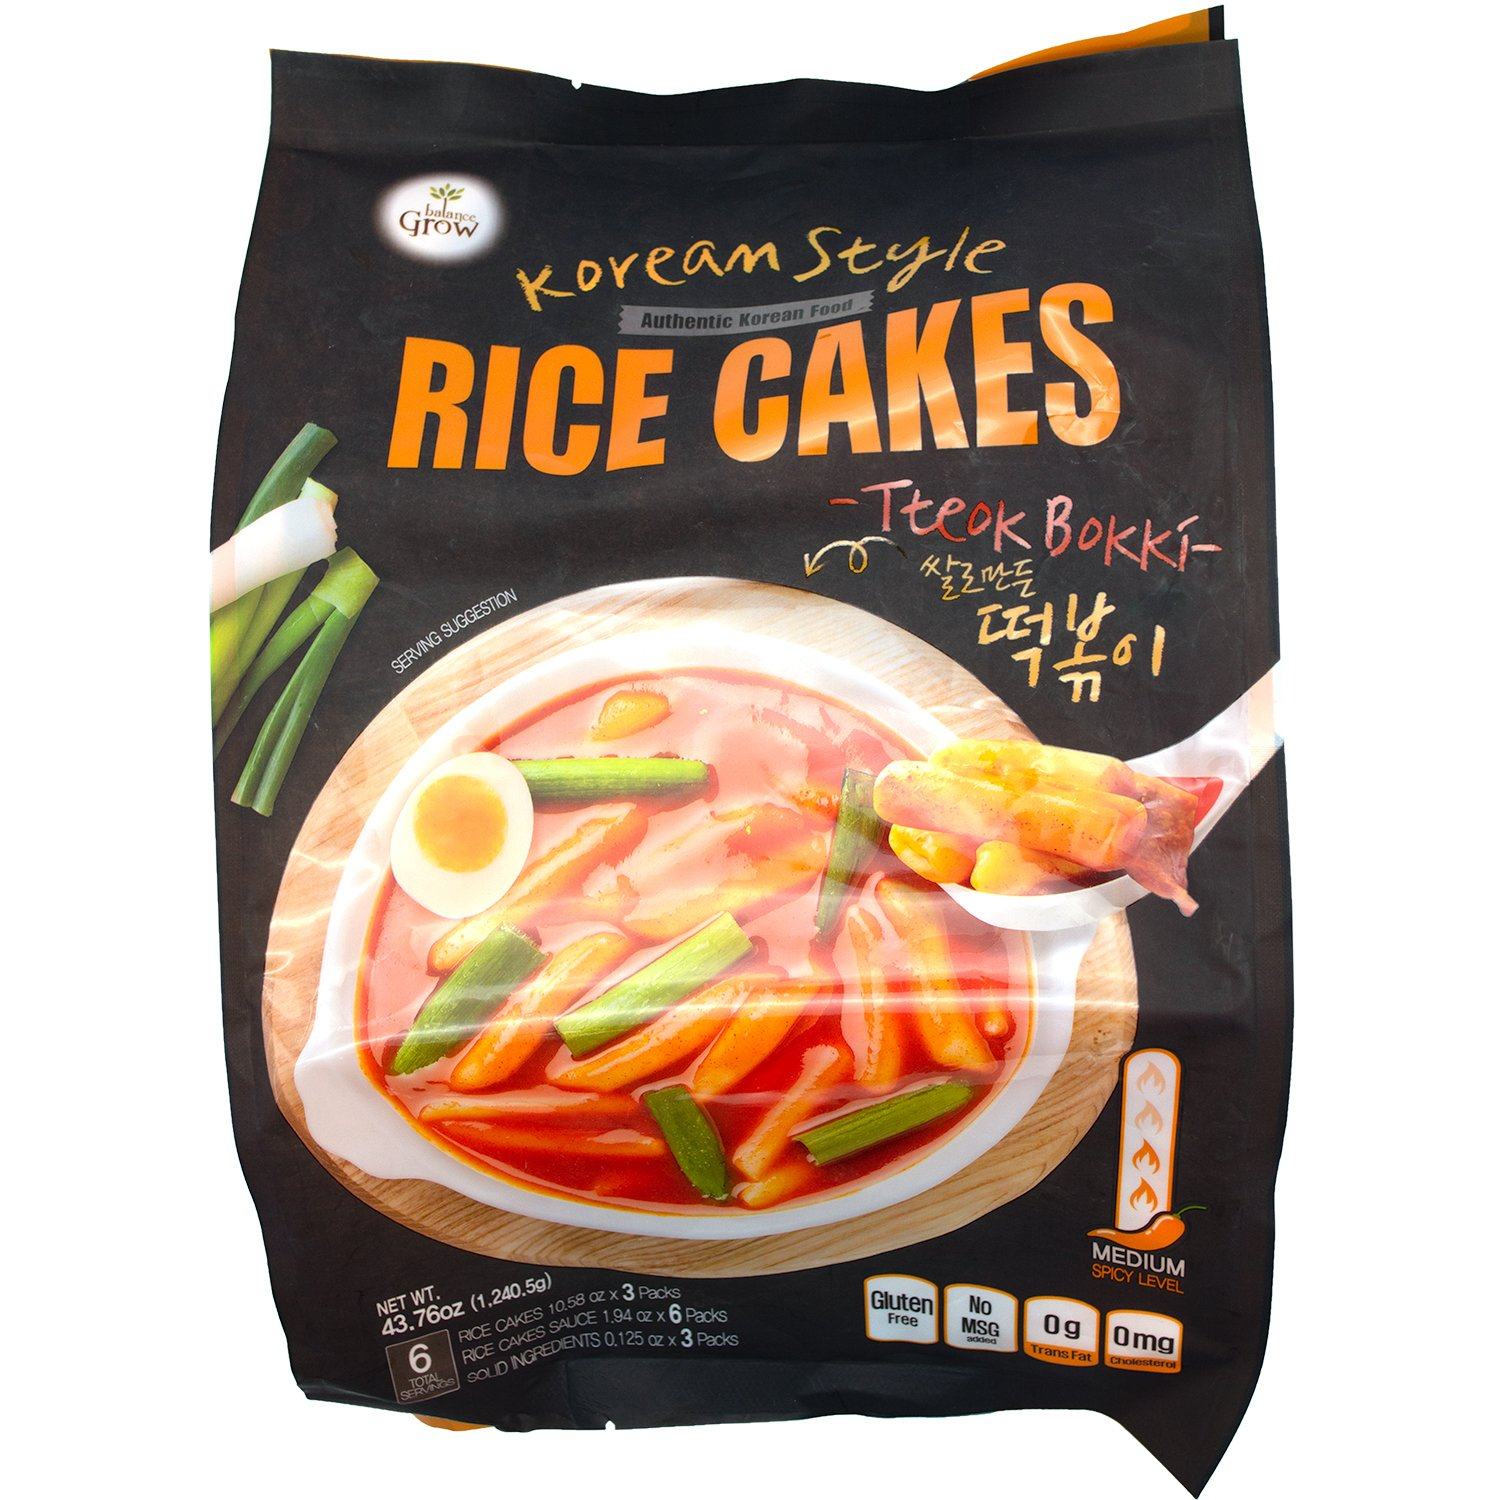 Balance Grow Authentic Korean Style Rice Cakes (Tteok Bokki) Balance Grow 43.76 Ounce 